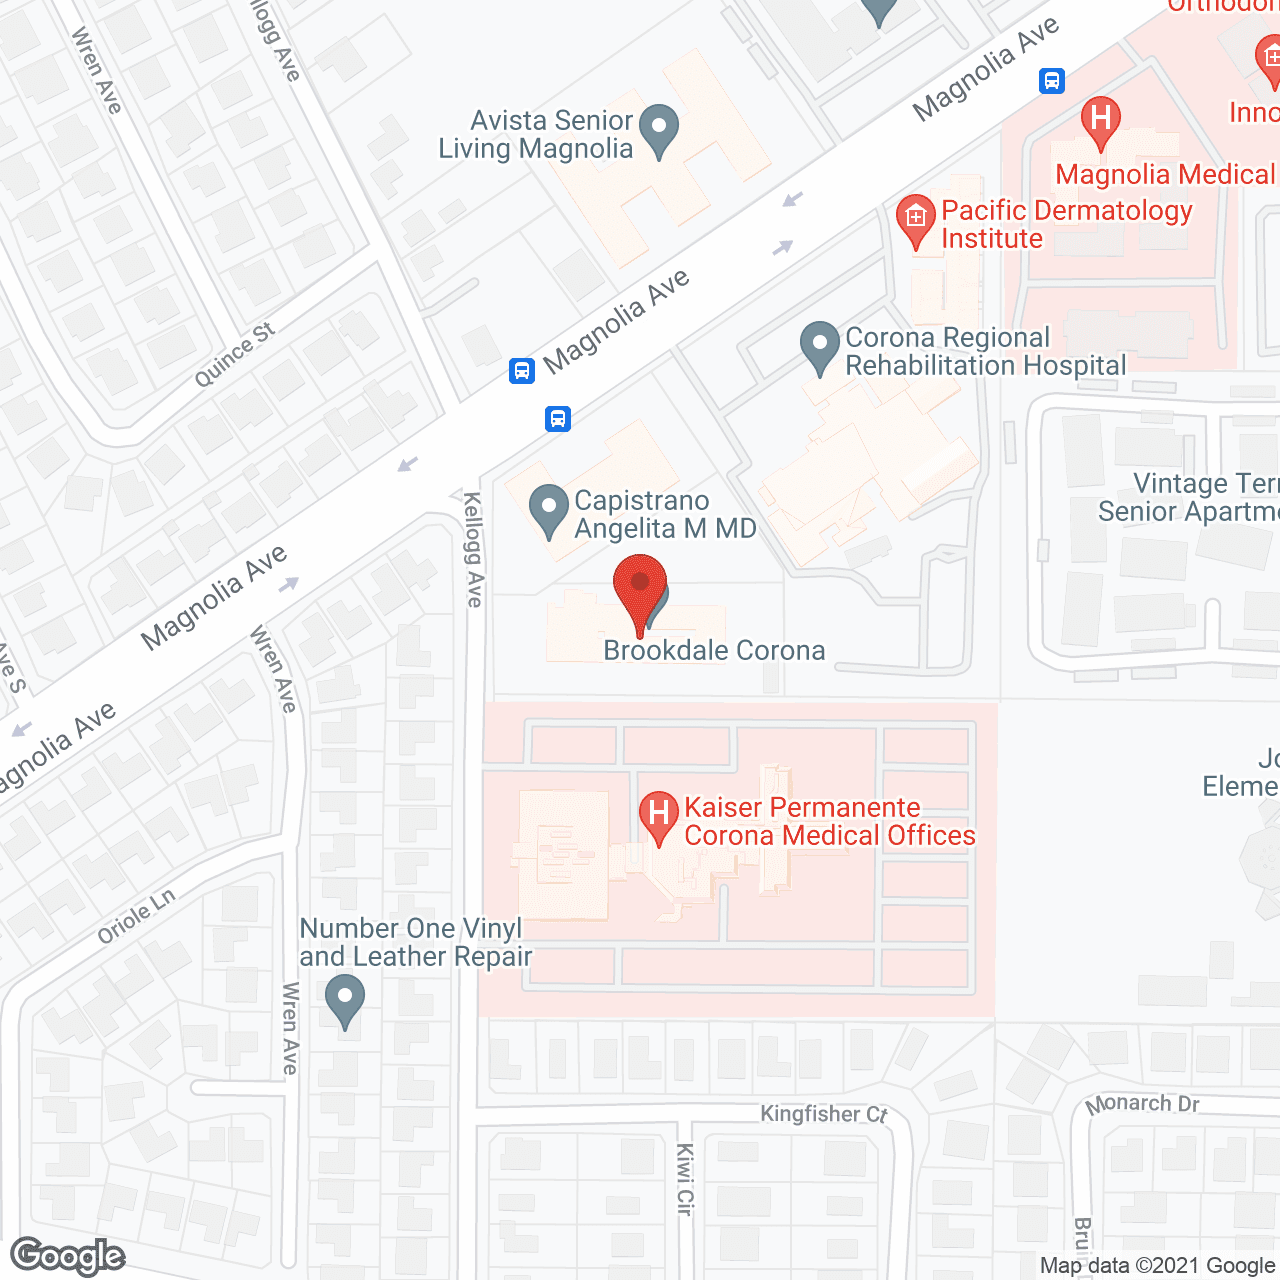 Brookdale Corona in google map